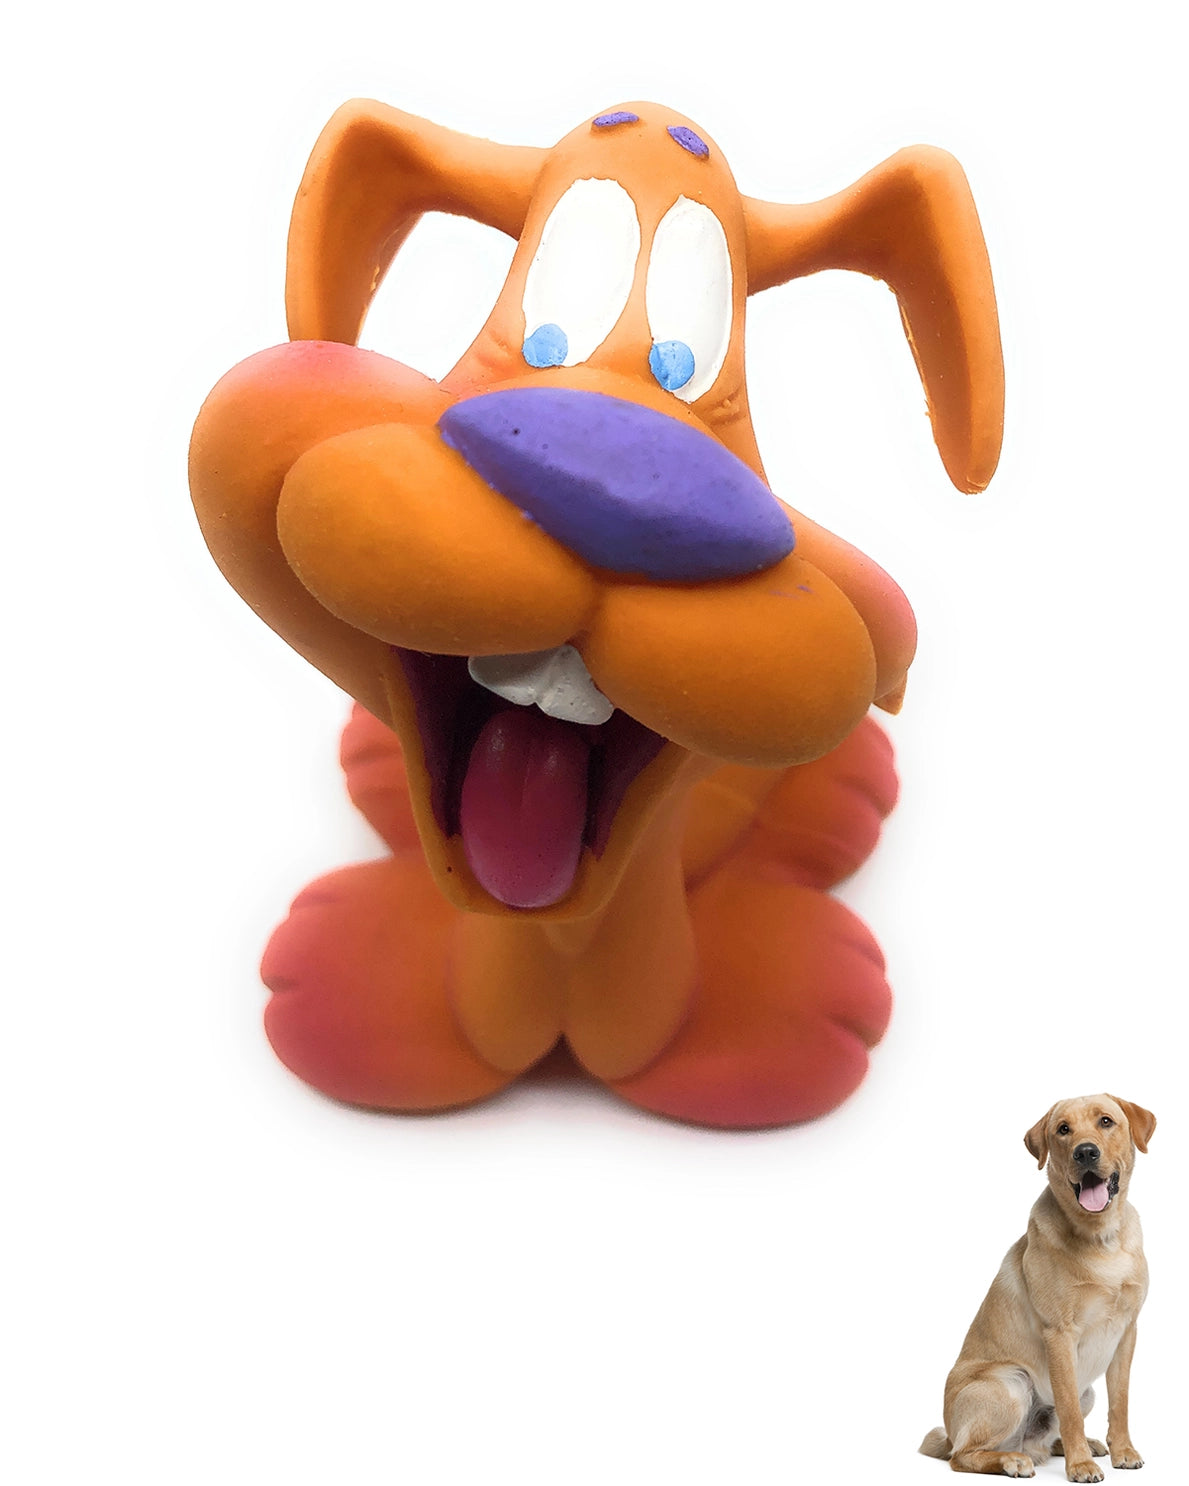 Squeaky Retro Smiley Dog Toy